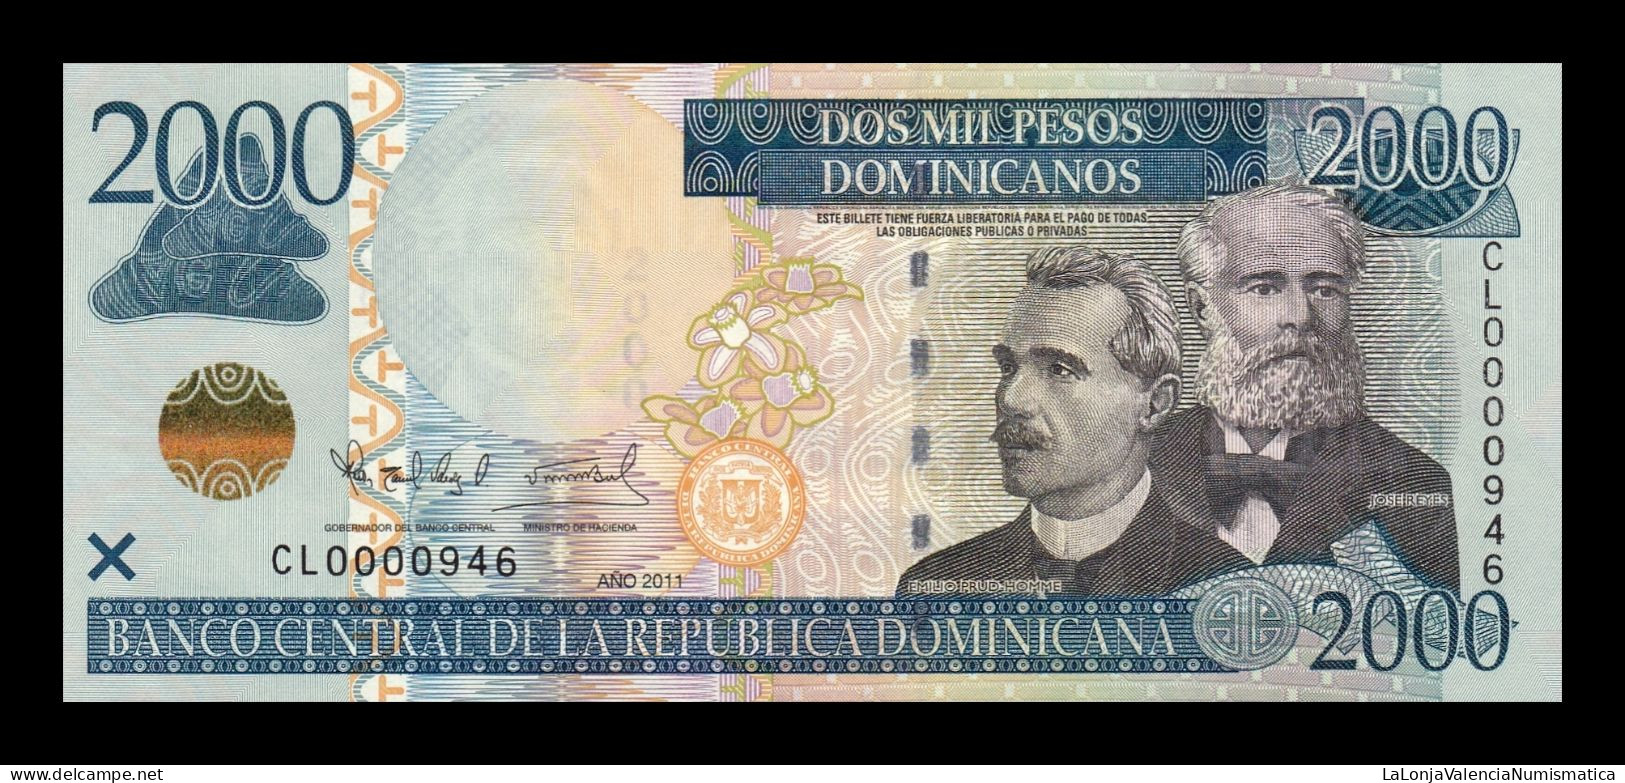 República Dominicana 2000 Pesos Dominicanos 2011 Pick 188a Low Serial 946 Sc Unc - Dominicana